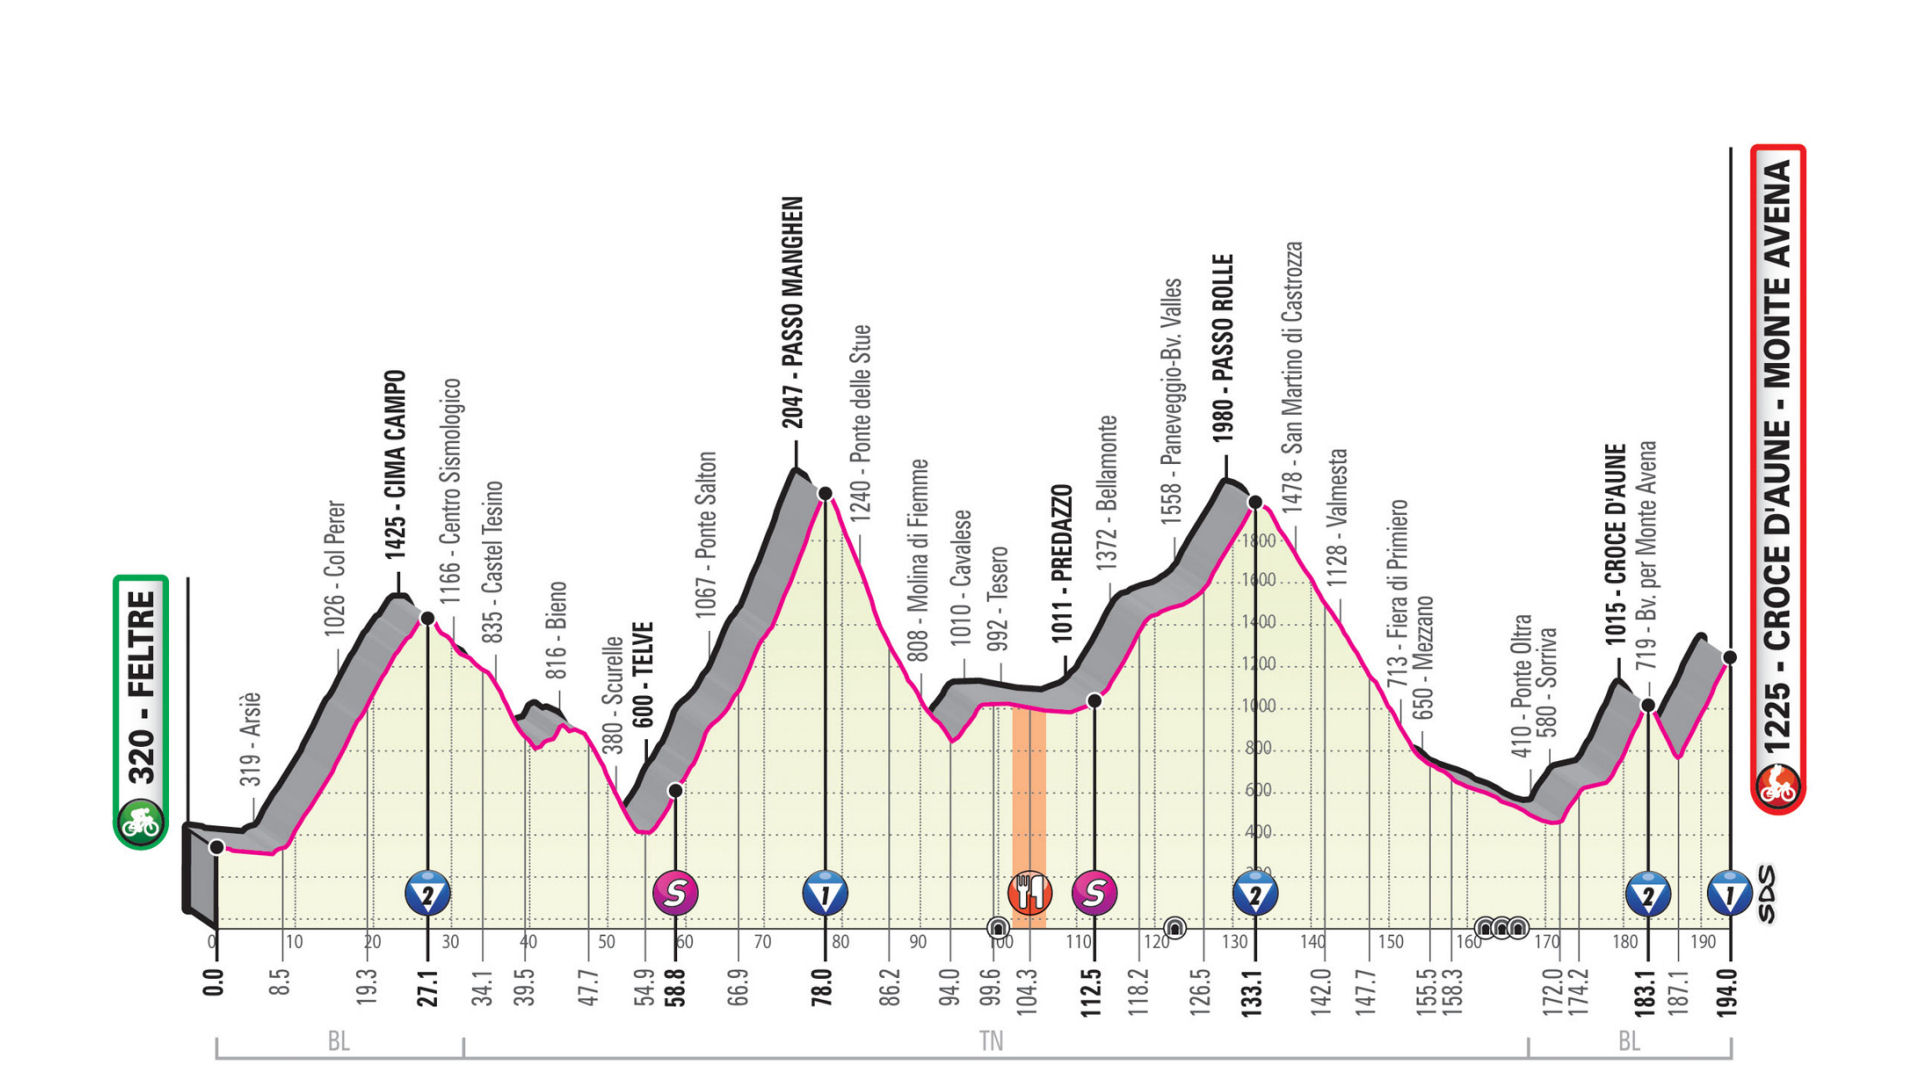 Giro d’Italia 2019: etap 20 – przekroje/mapki